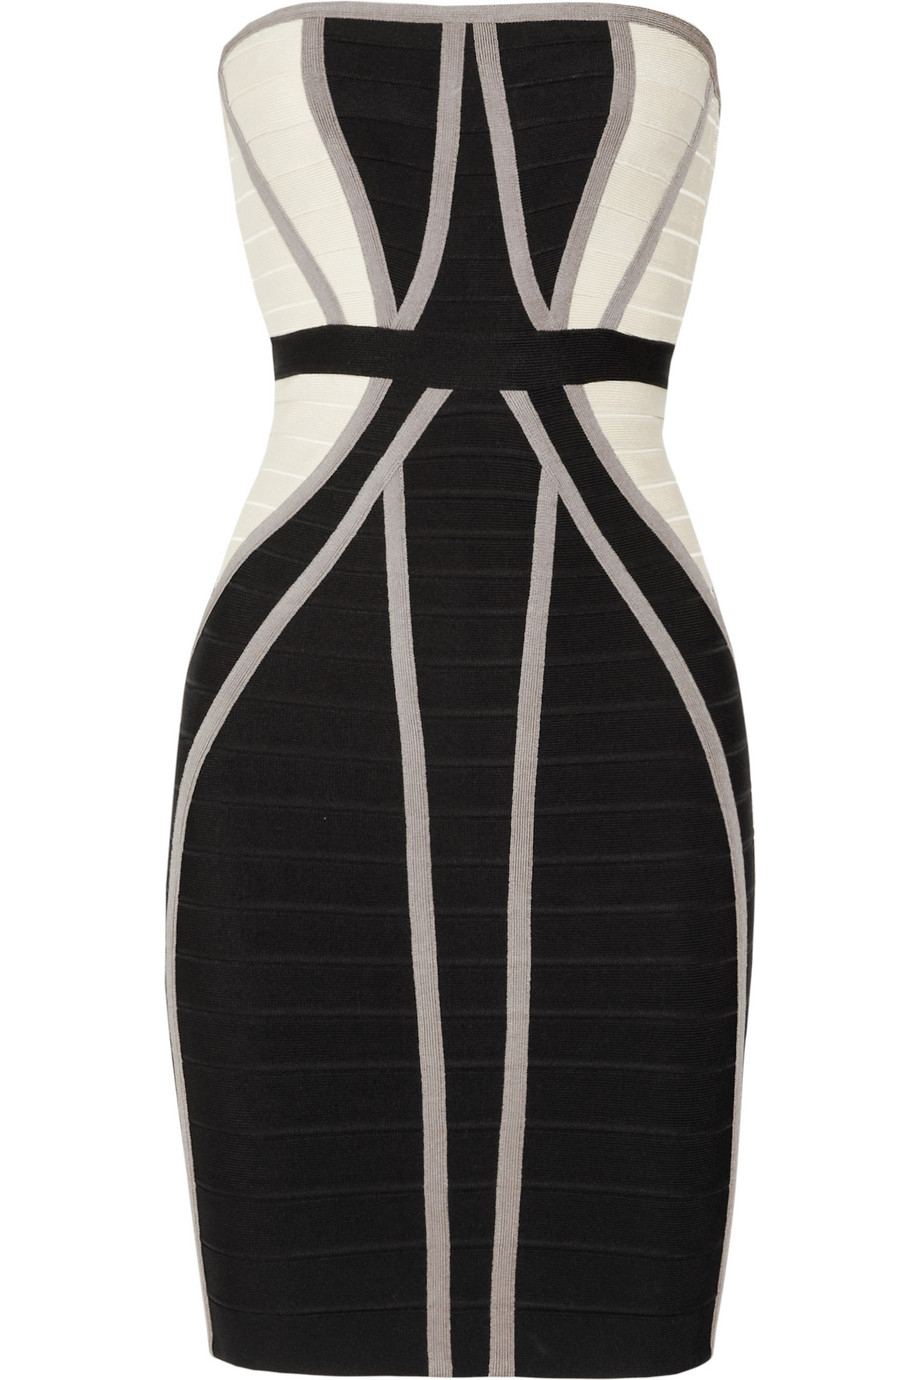 Lyst - Hervé léger Strapless Paneled Bandage Dress in Black